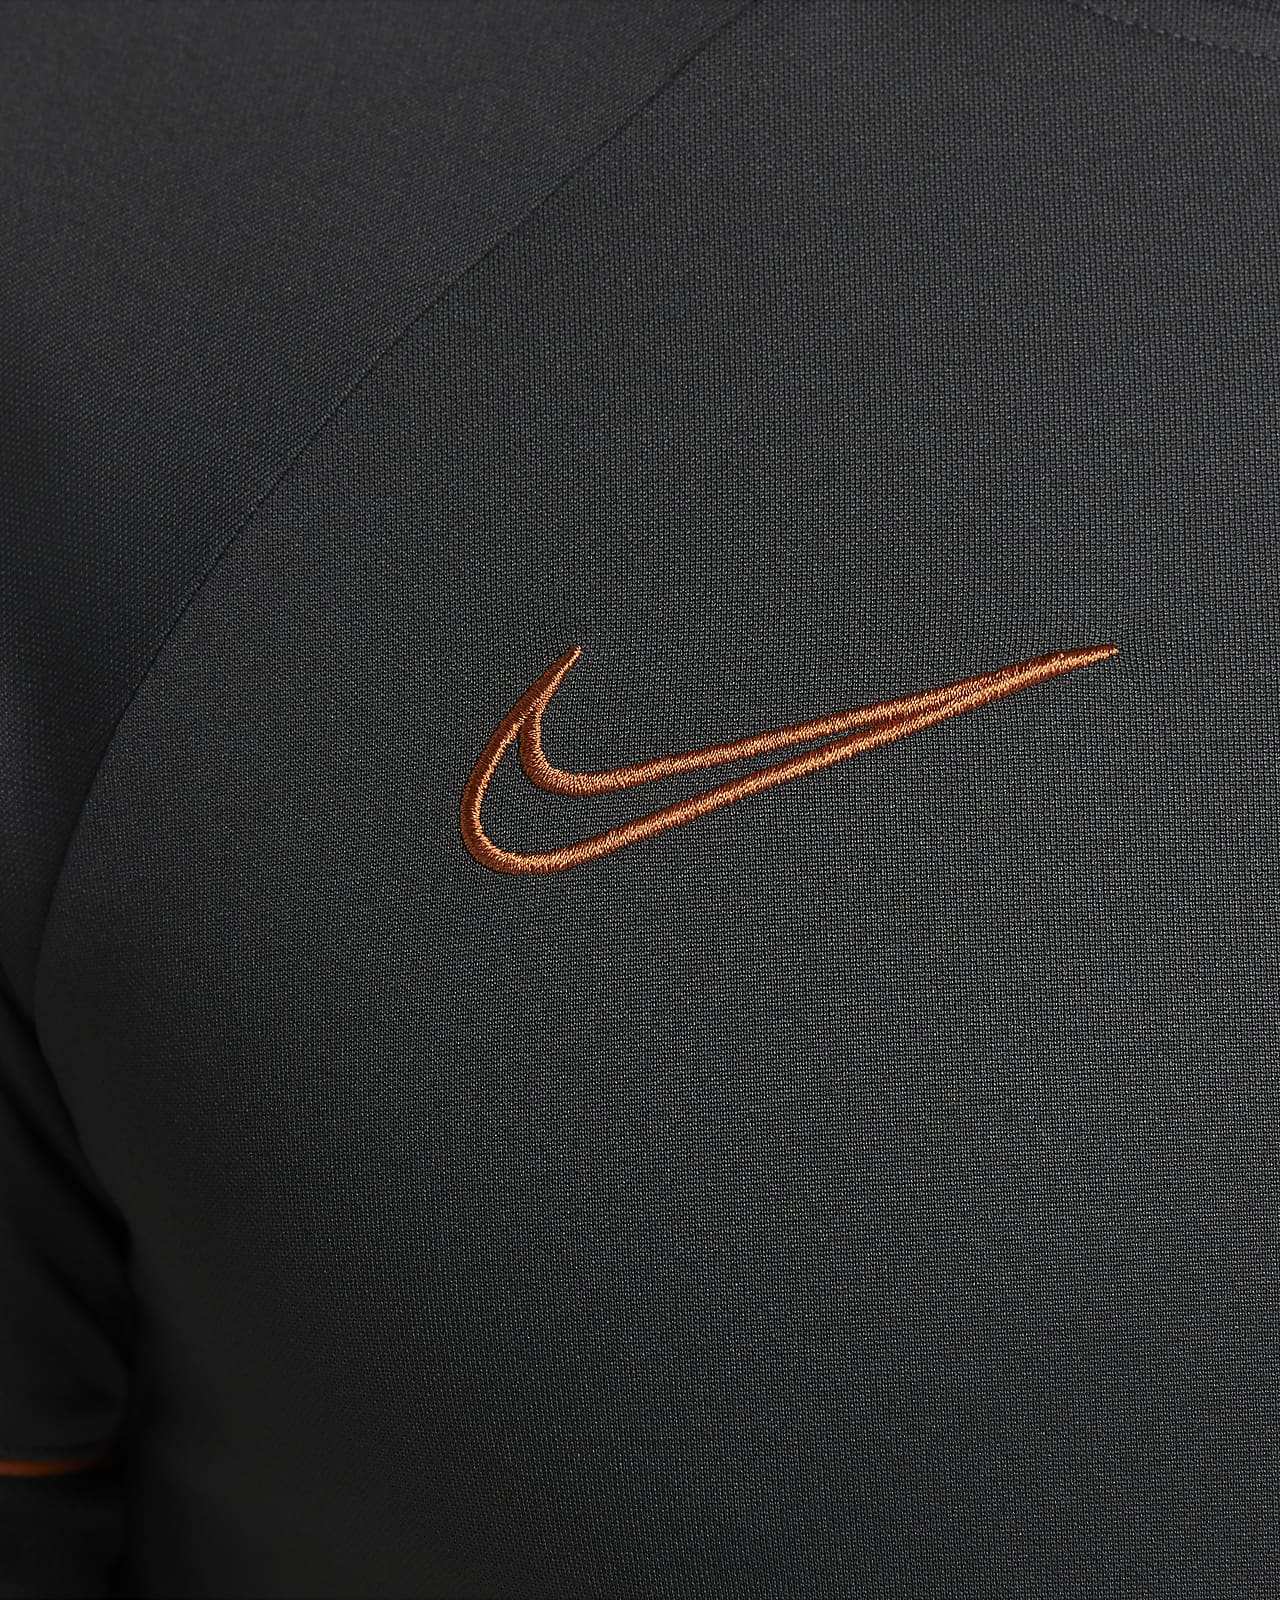 Nike Dri-FIT Academy Men's Short-Sleeve Football Top. Nike ID